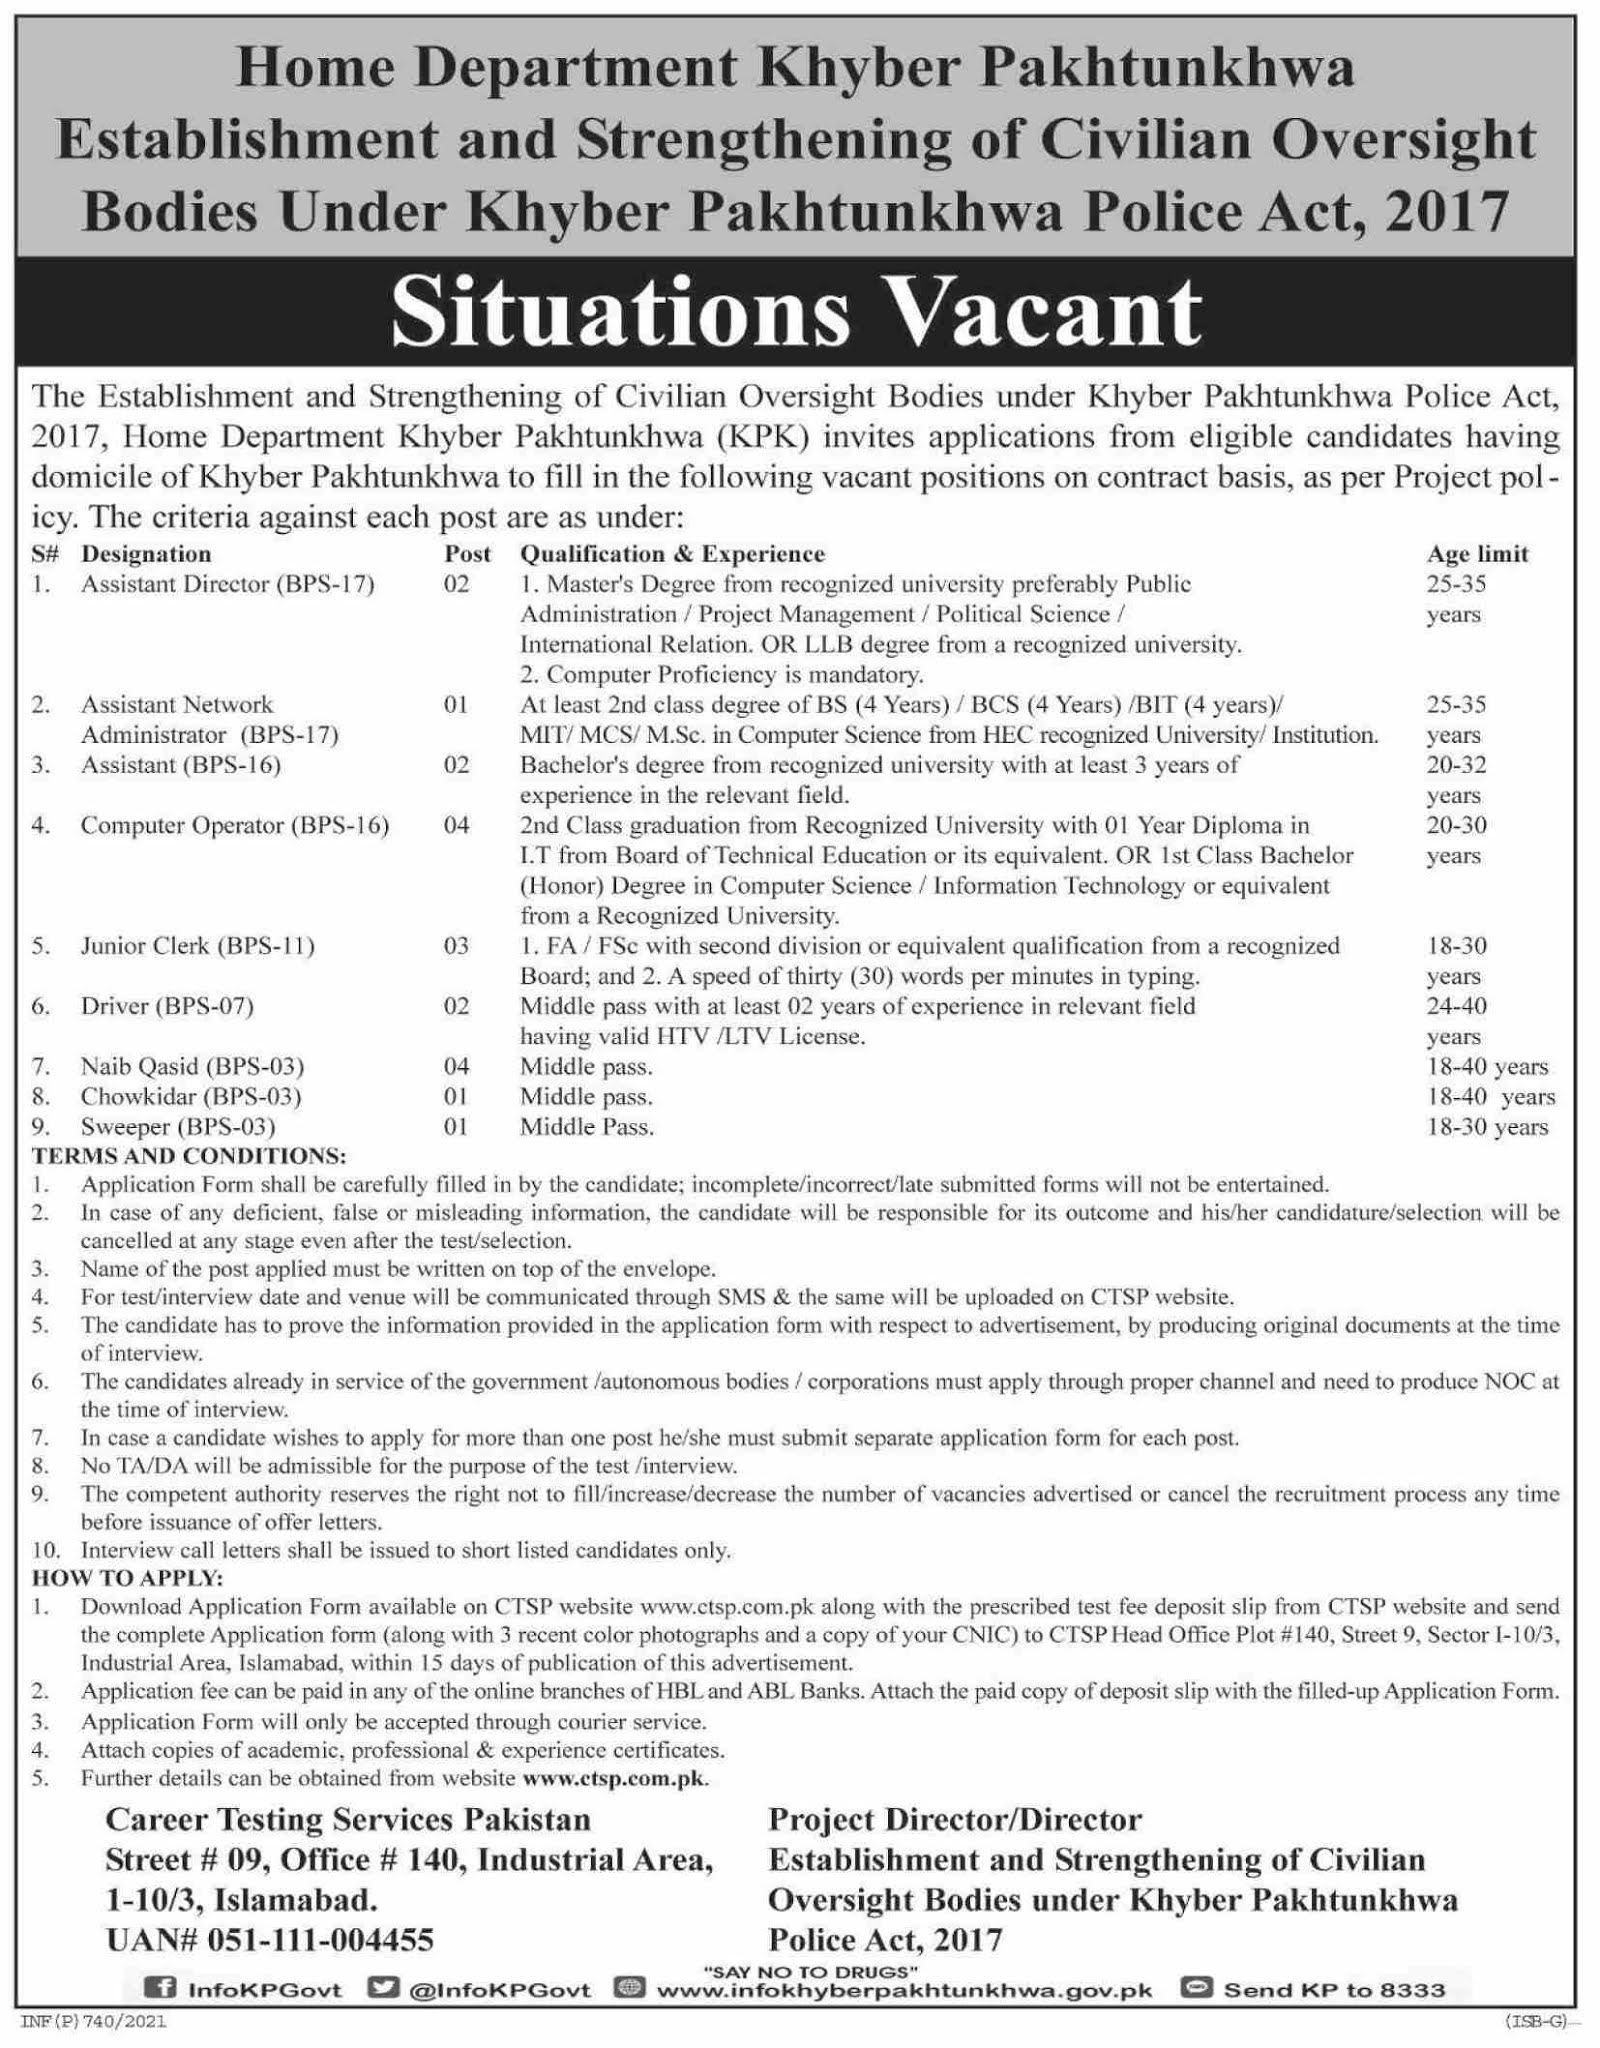 Home Department Jobs 2021 - Home Department KPK Jobs 2021 - Download Home Department Job Application Form :- www.ctsp.edu.pk